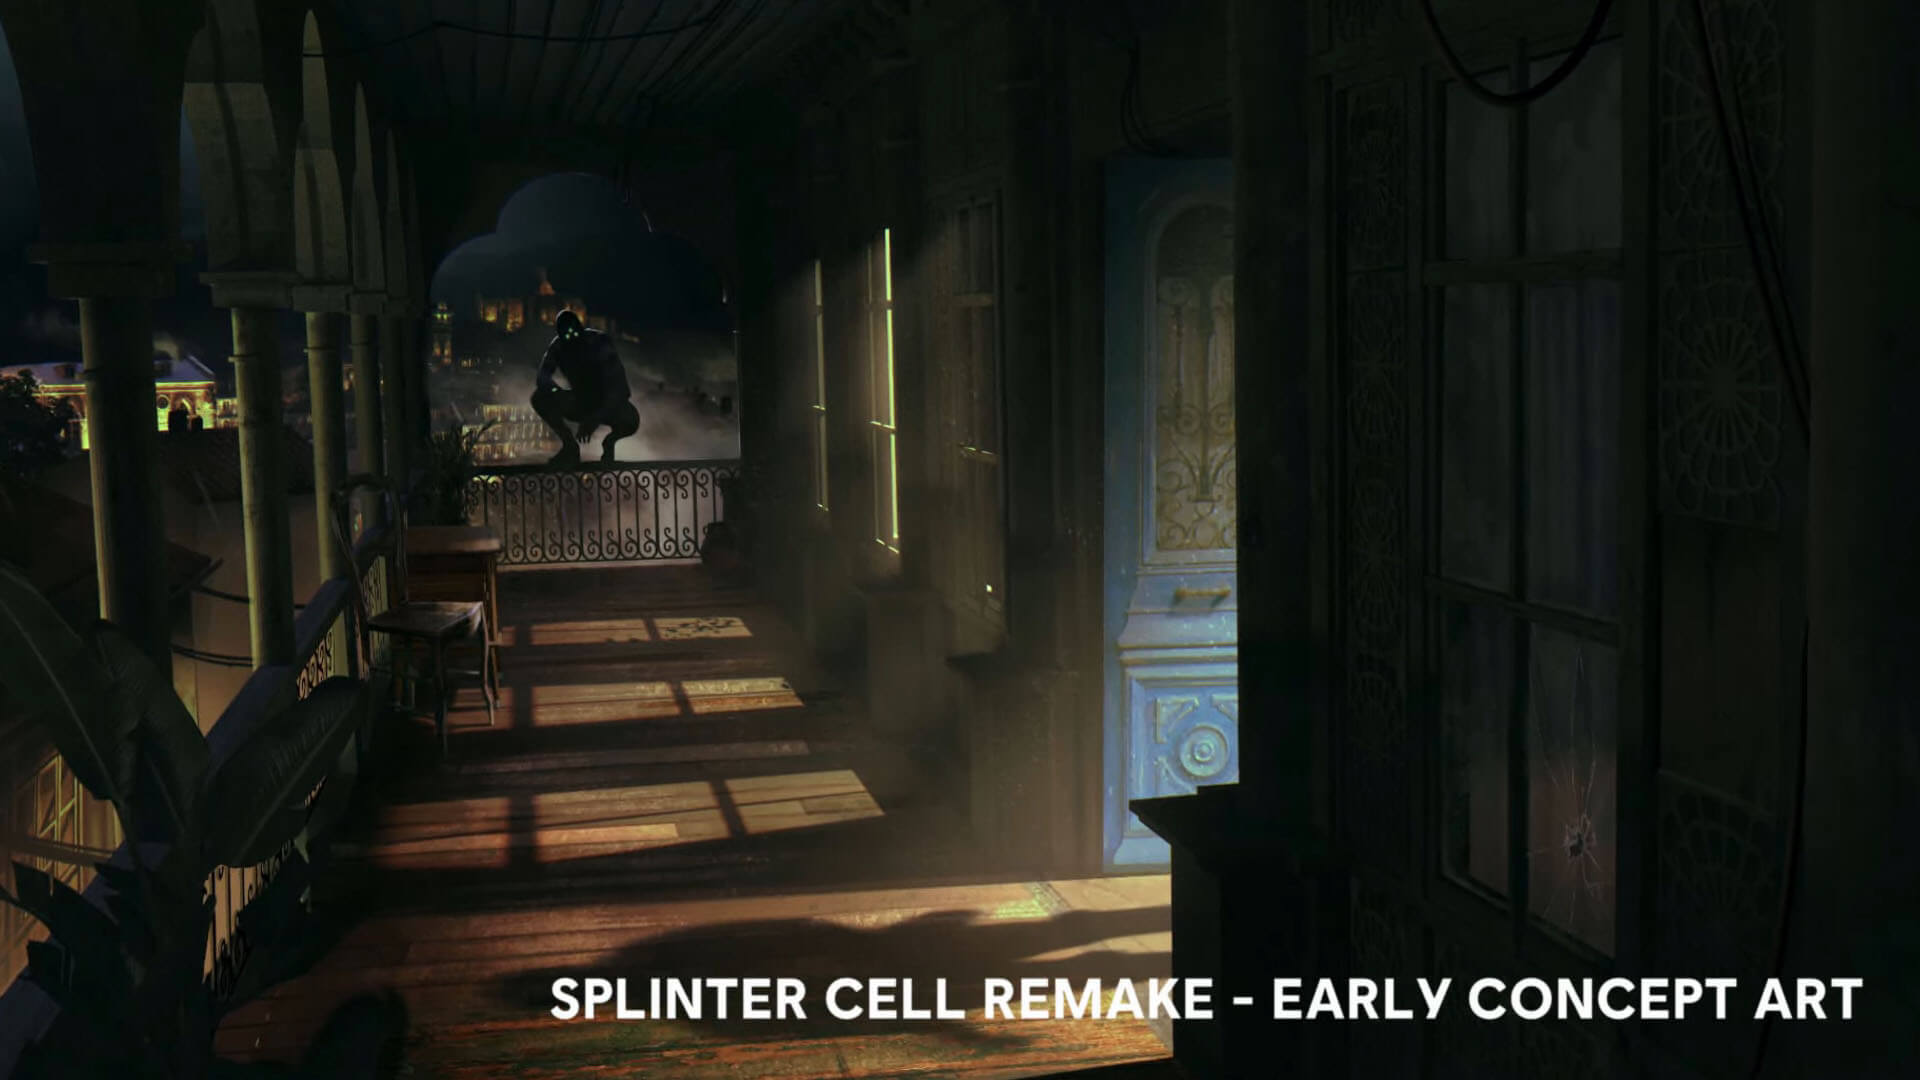 Splinter-Cell-Remake-concept-art-4.jpg